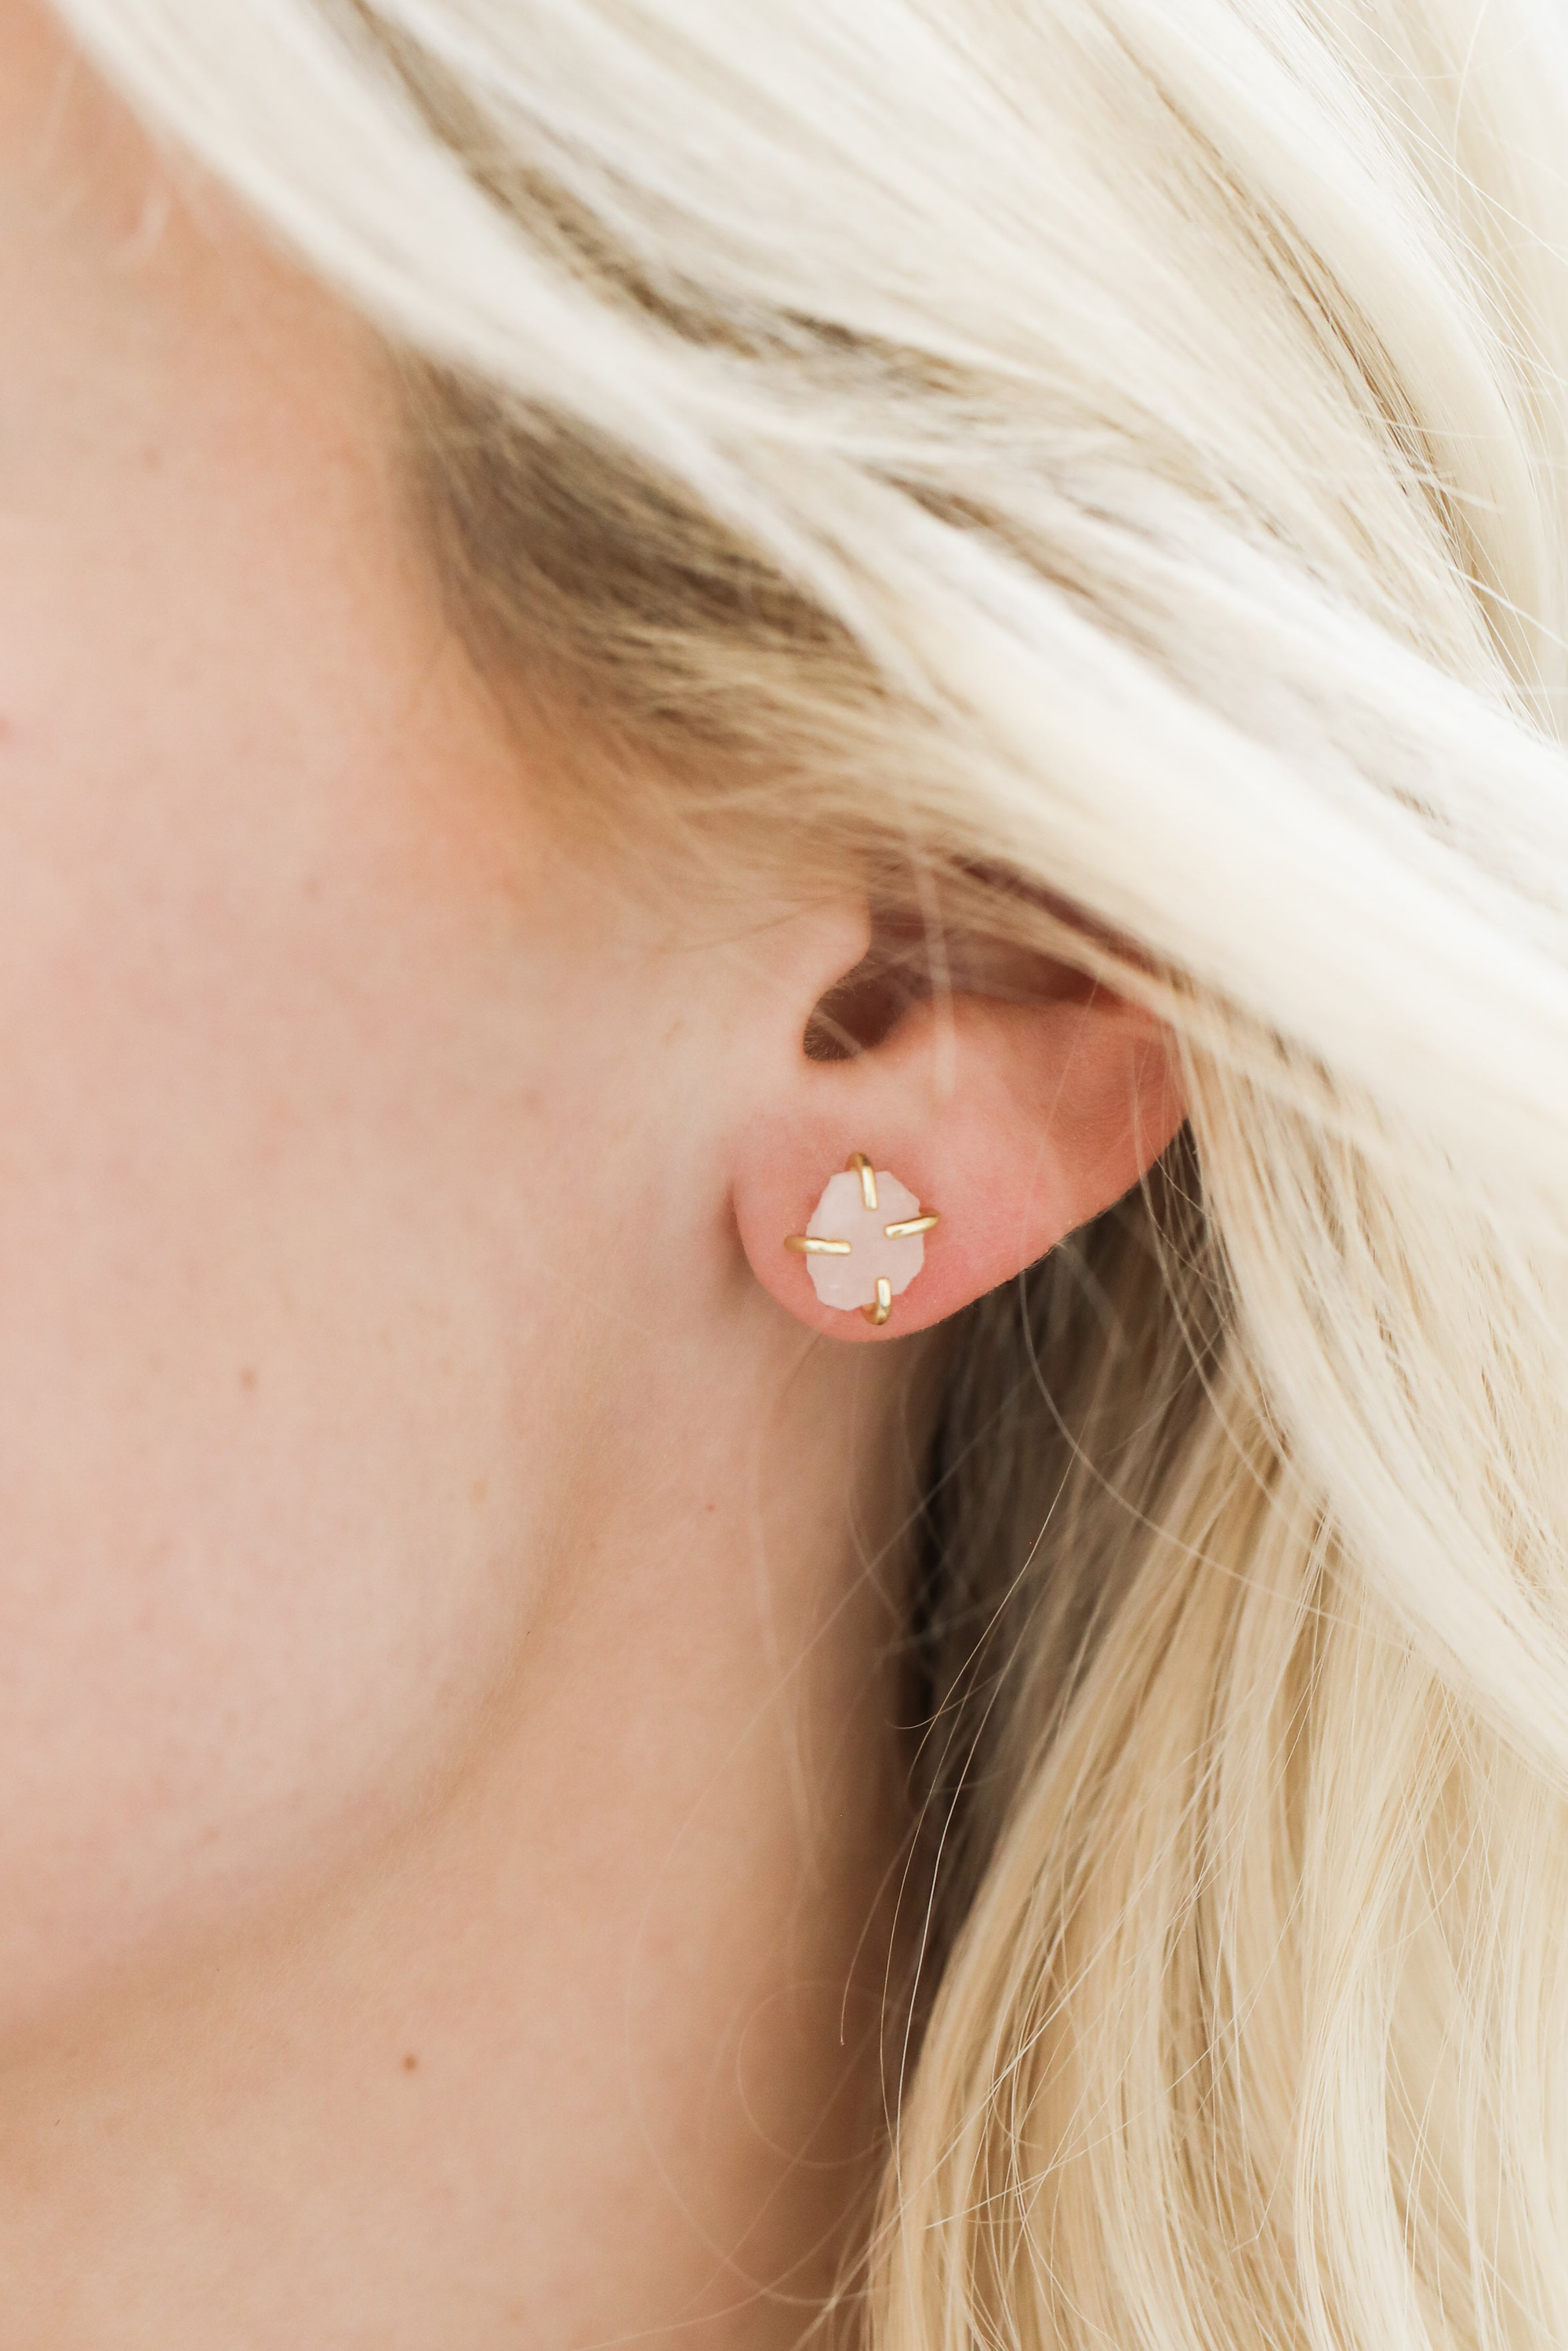 Gemstone Prong Earrings